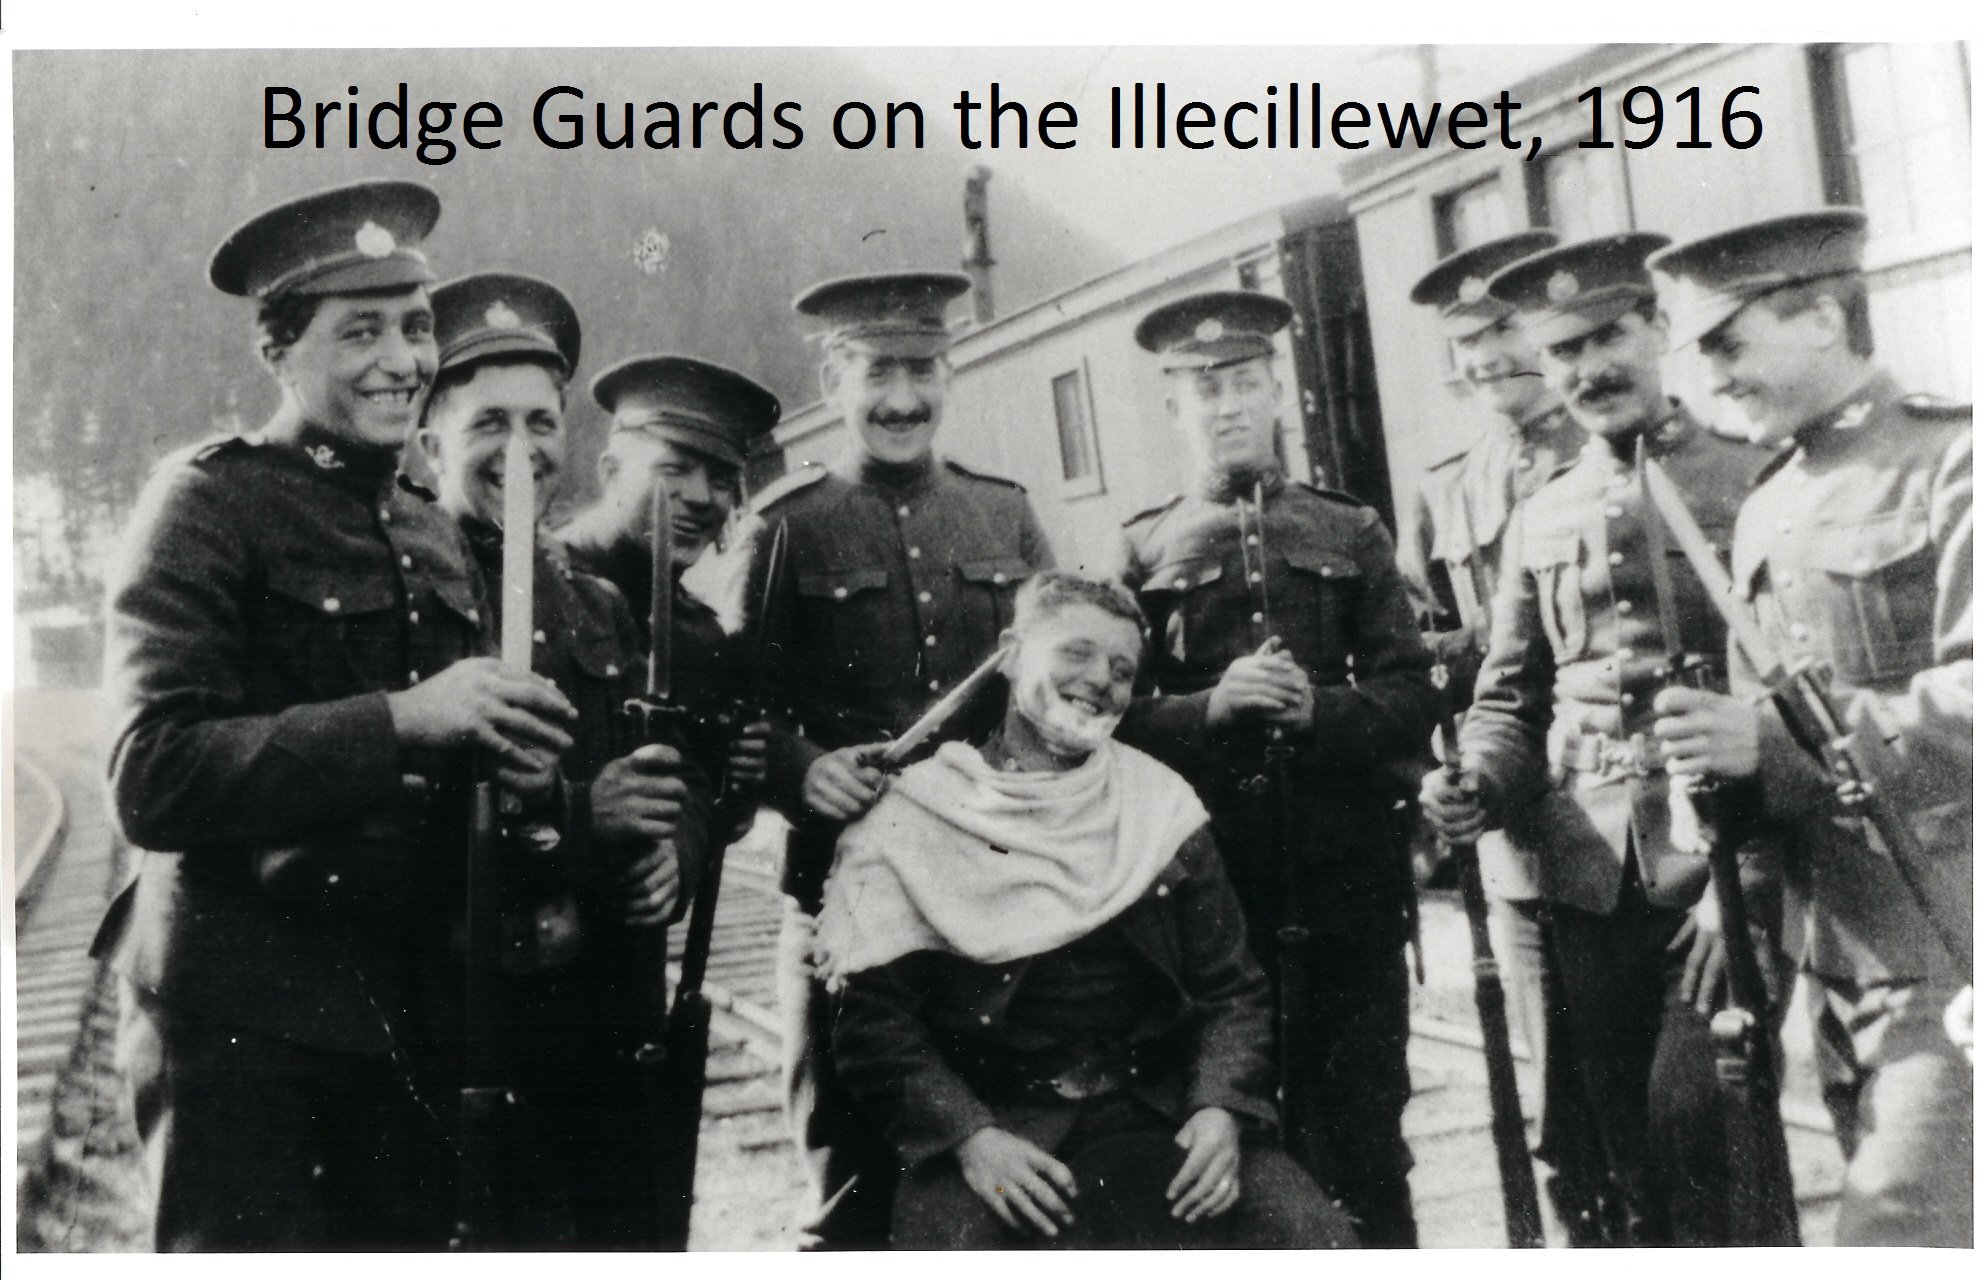 1400 Bridge Guards Illecillewaet 1916.jpg